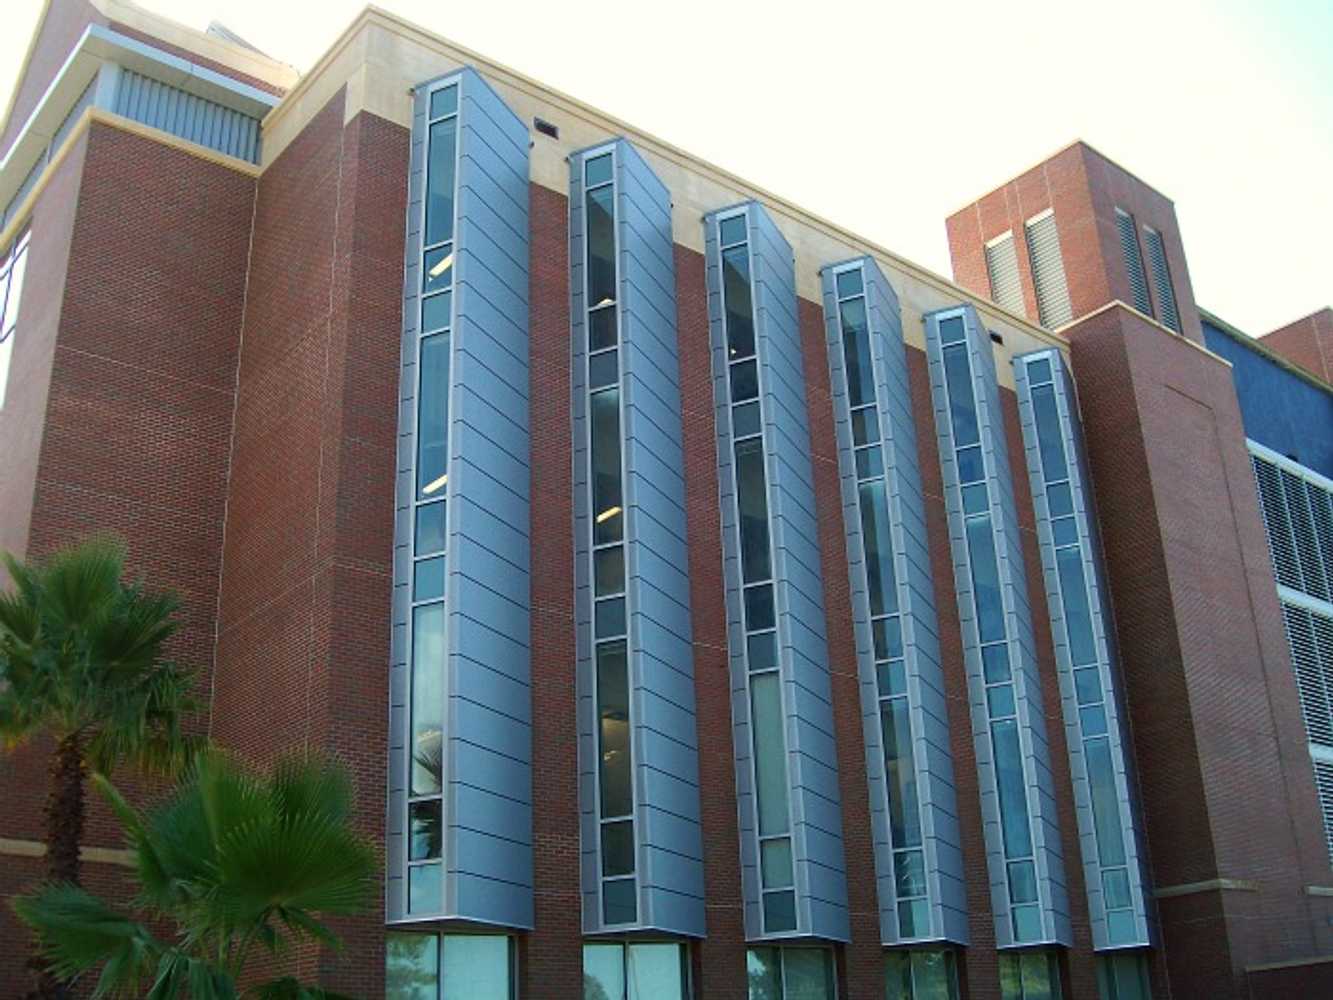 University of Florida - Pathegon Building